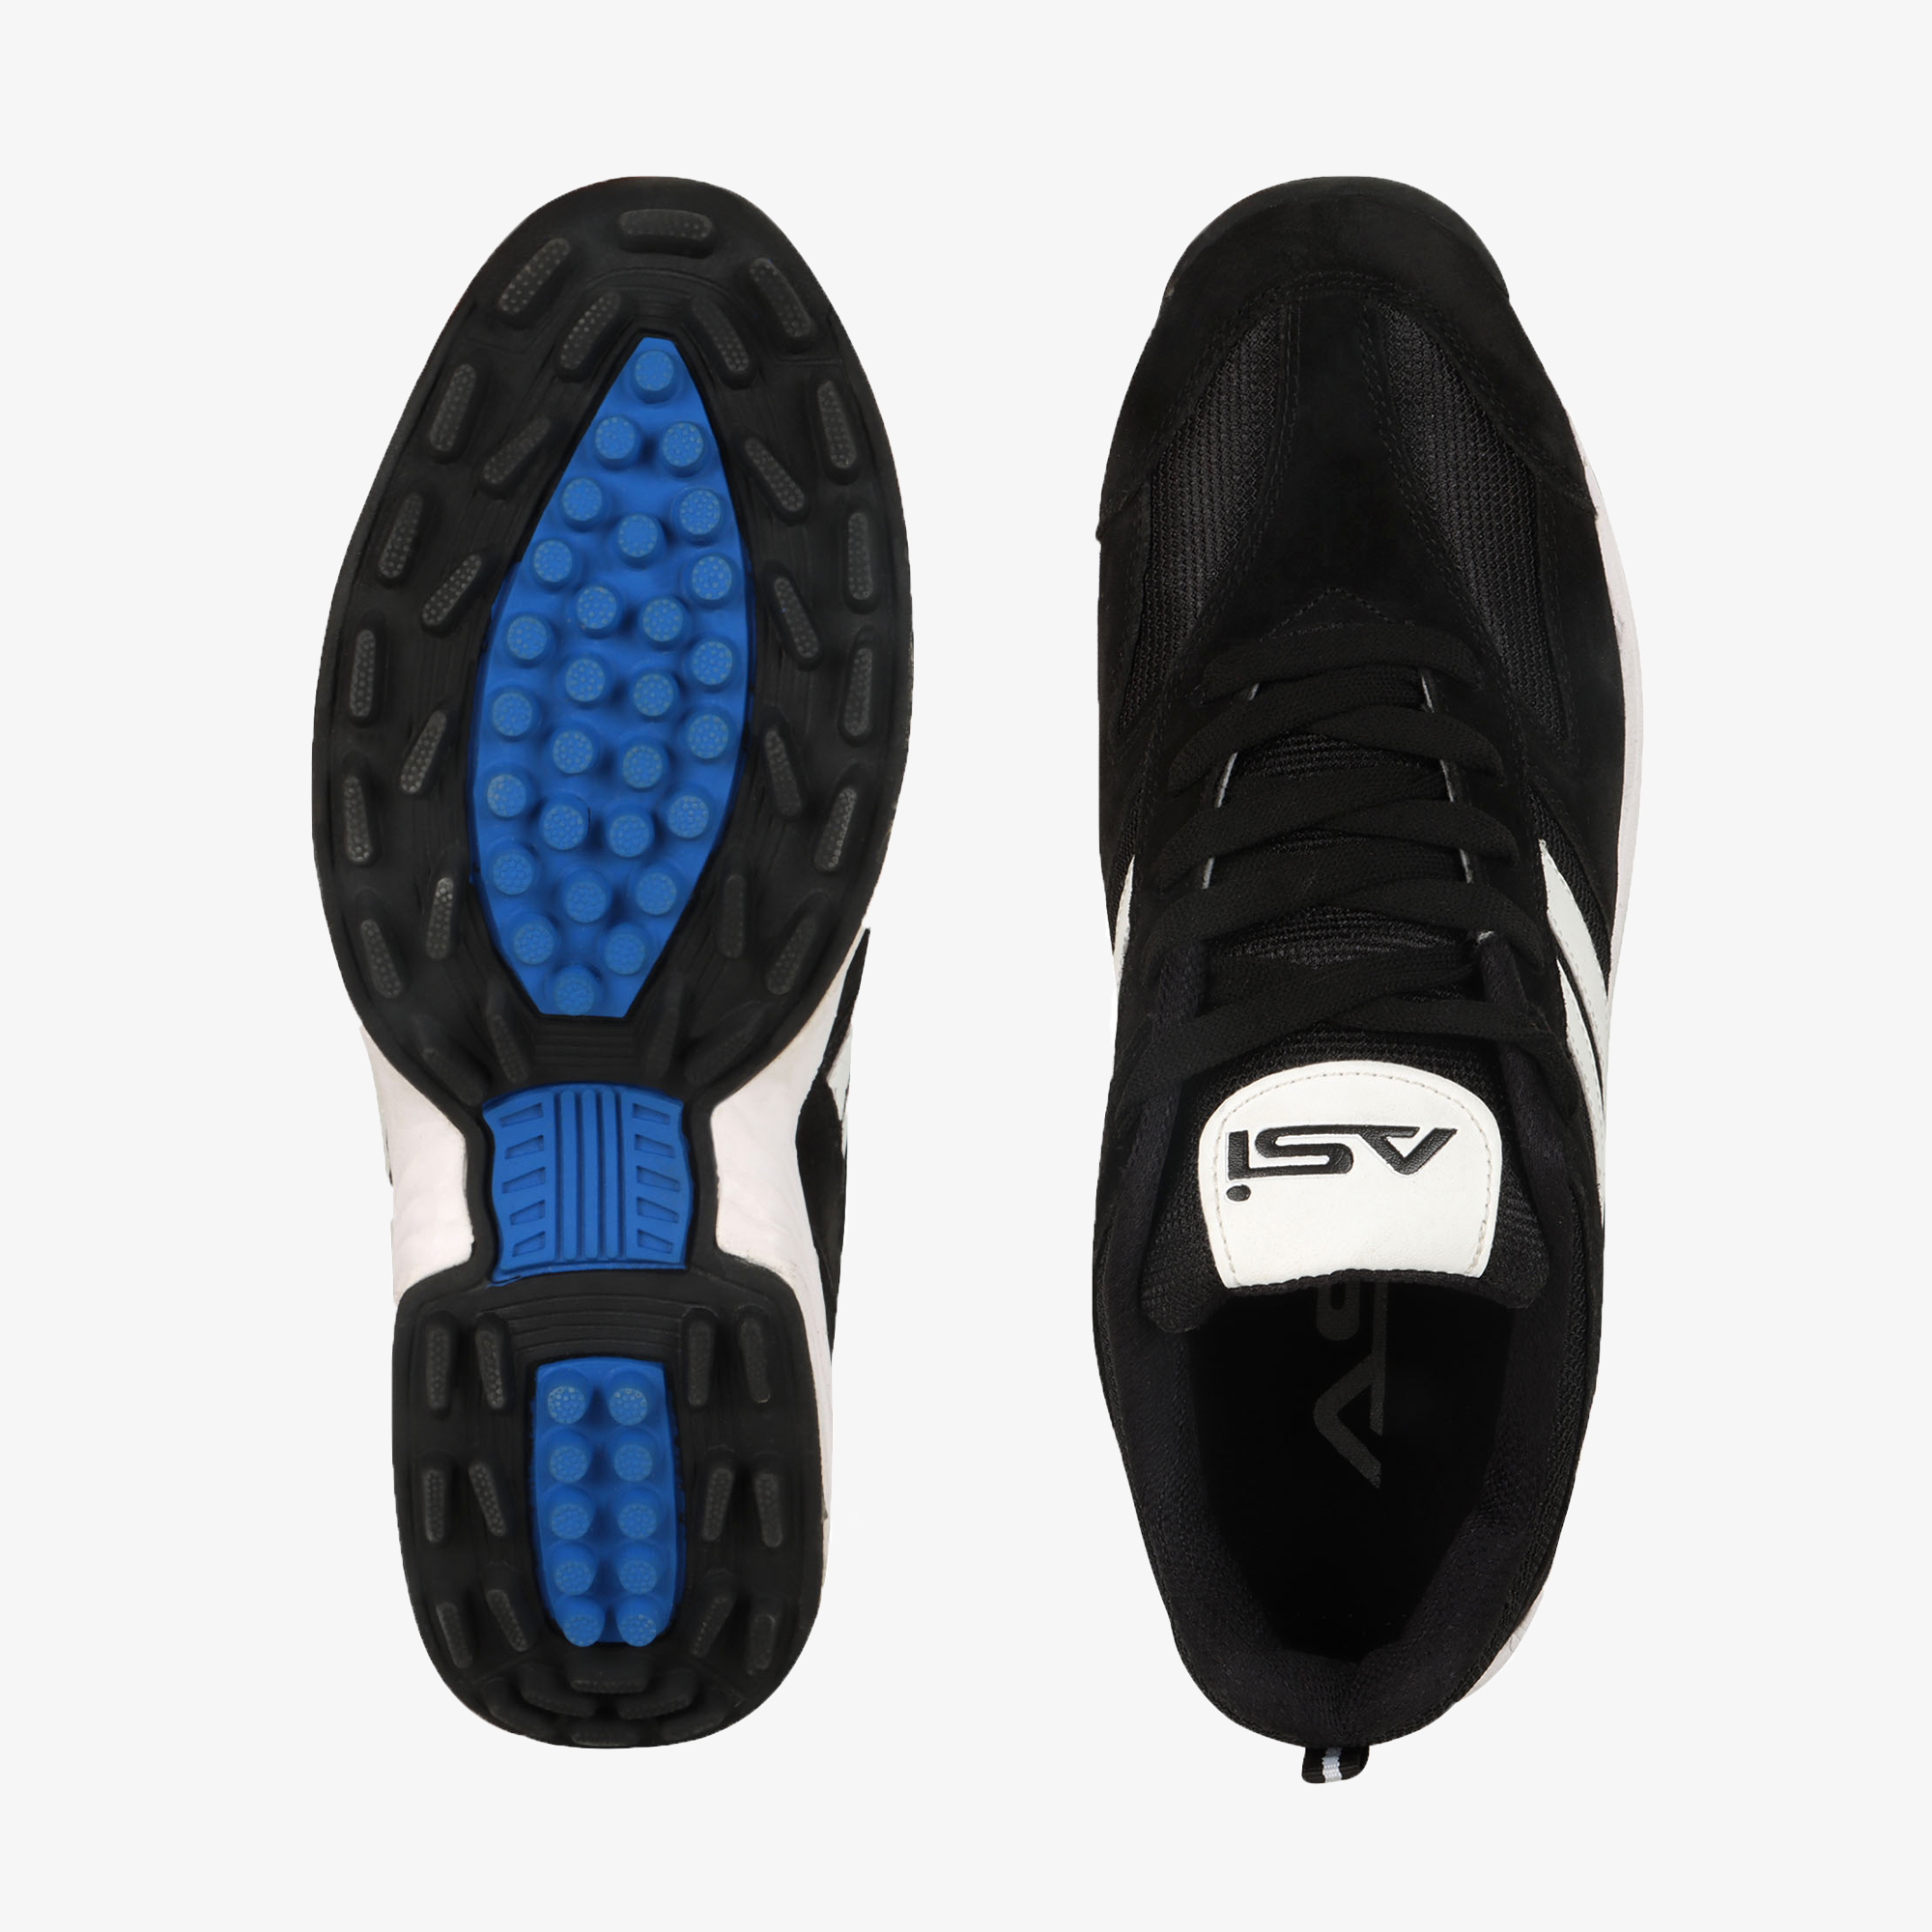 Buy Men's Black Running Sports Shoes Online at Shopclues